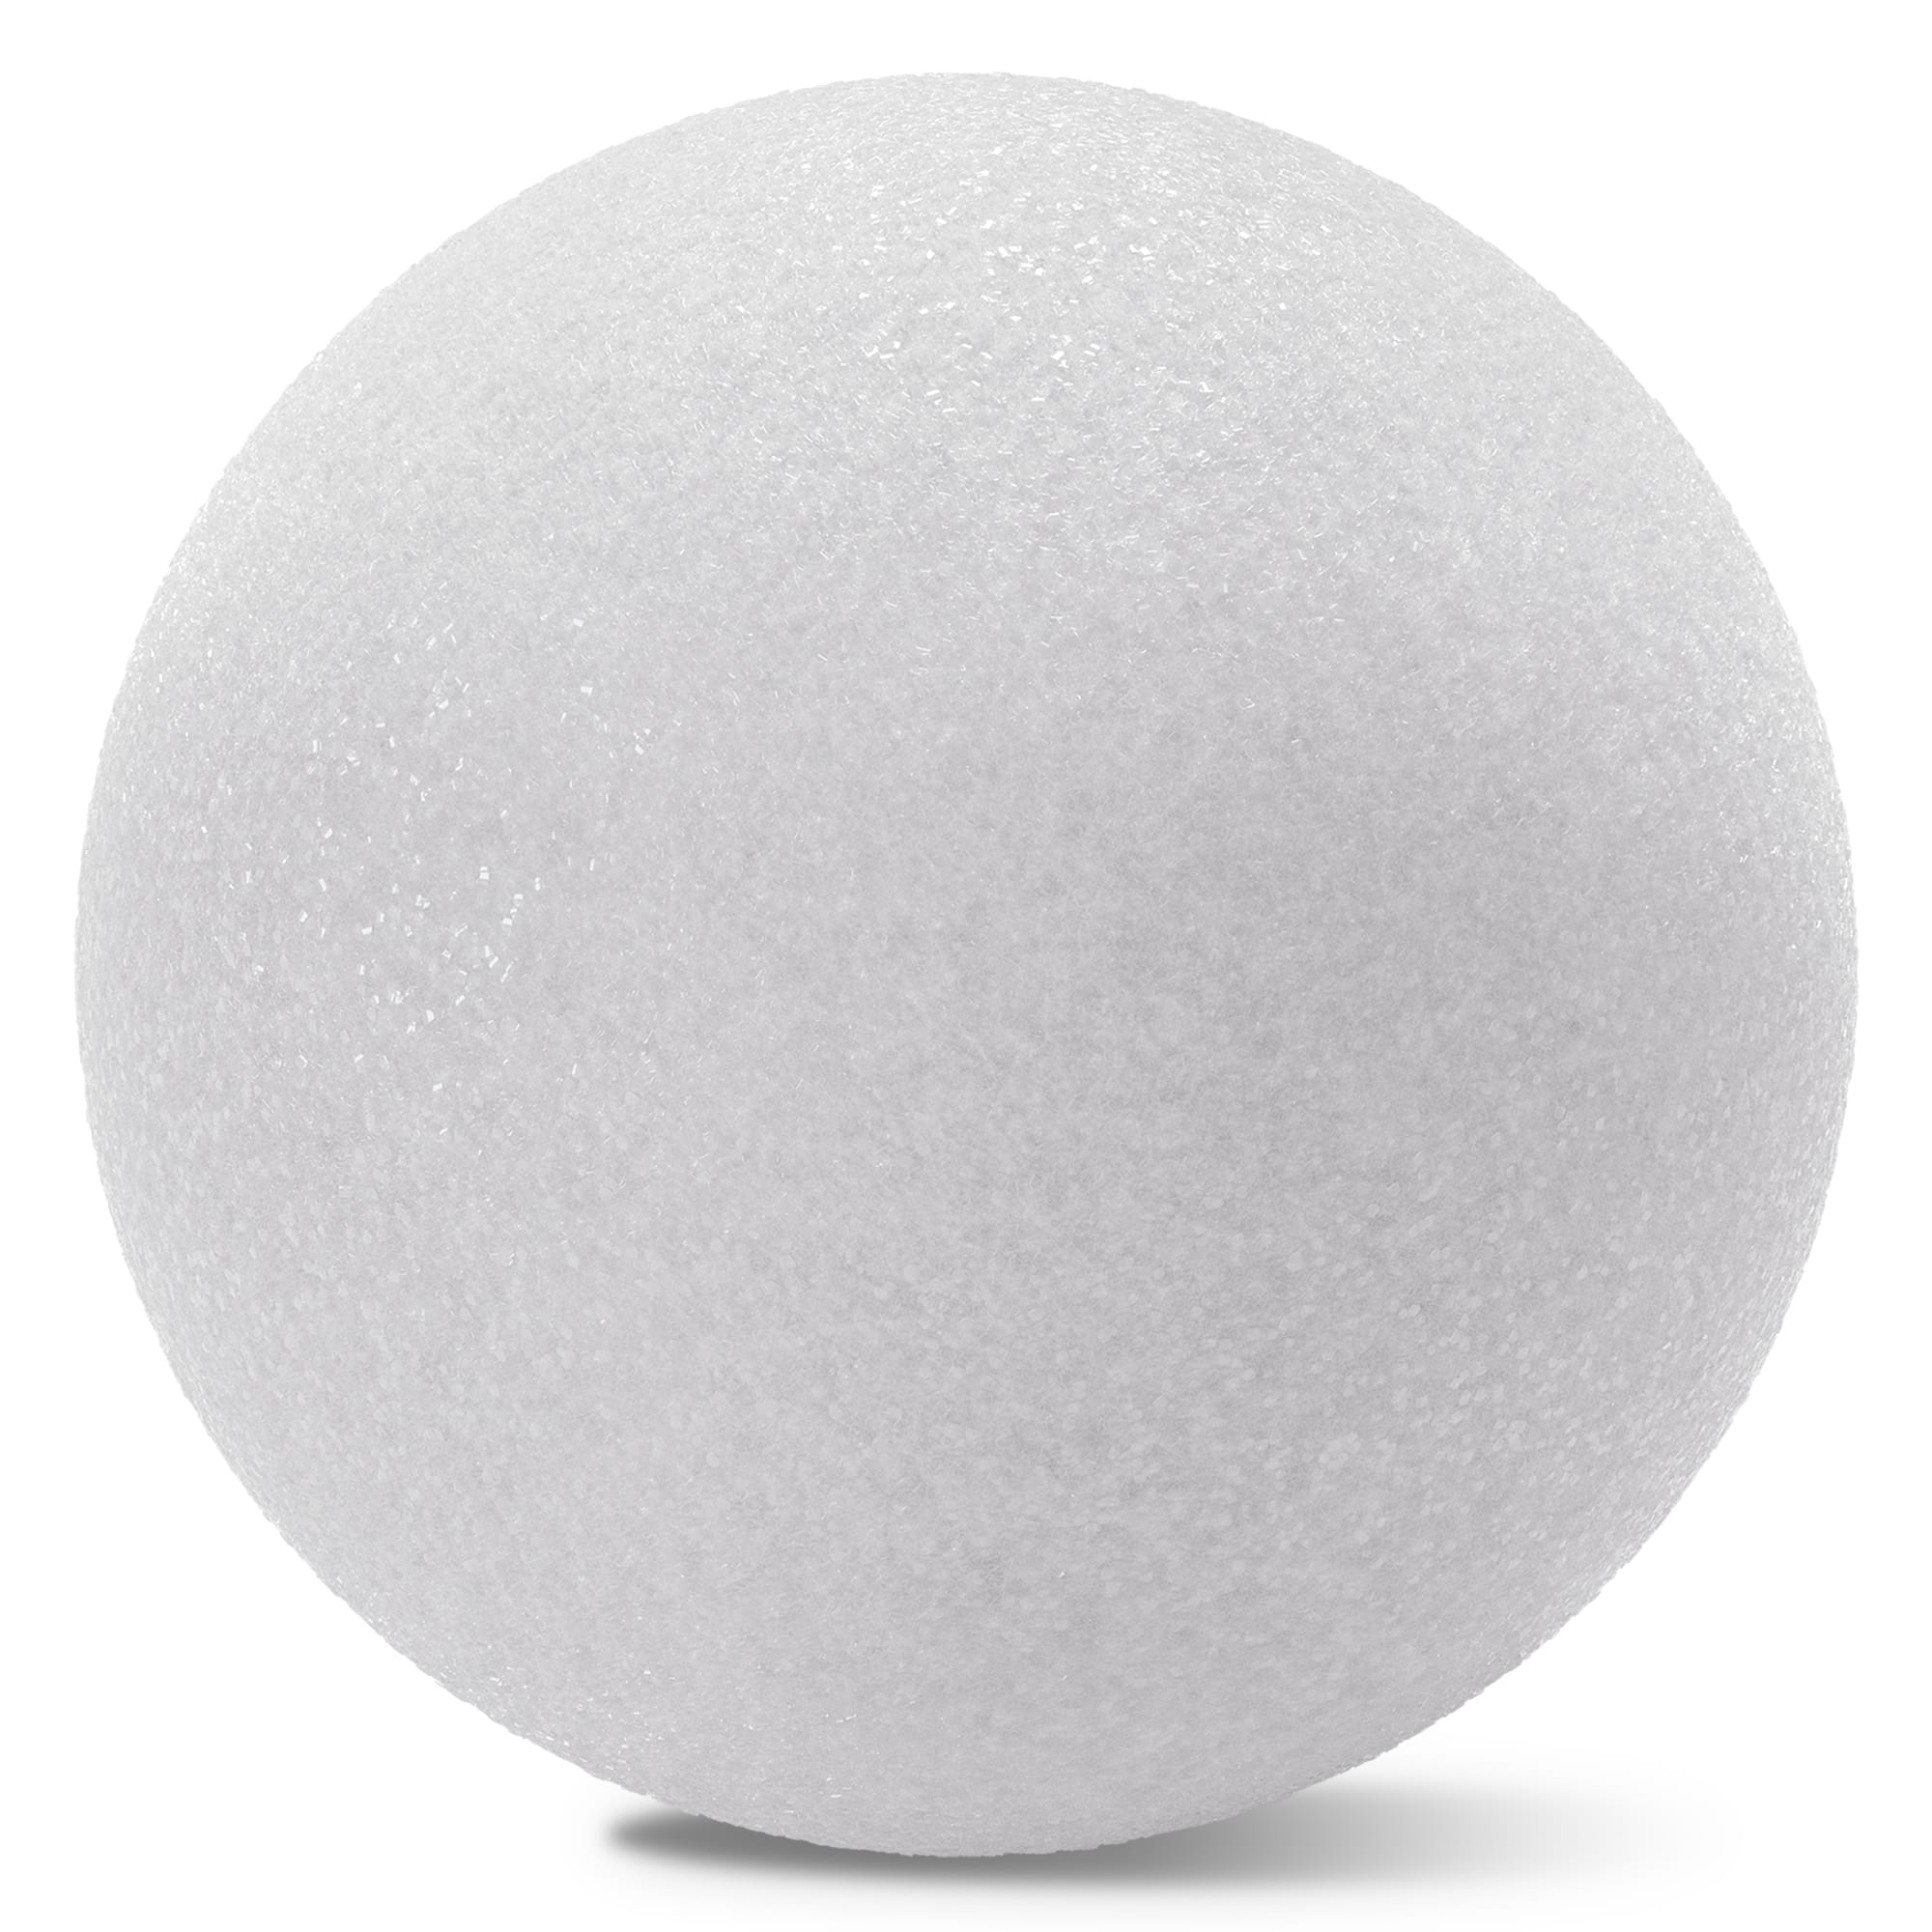 Large Foam Balls - Hollow White EPS Foam - up to 30 diameter